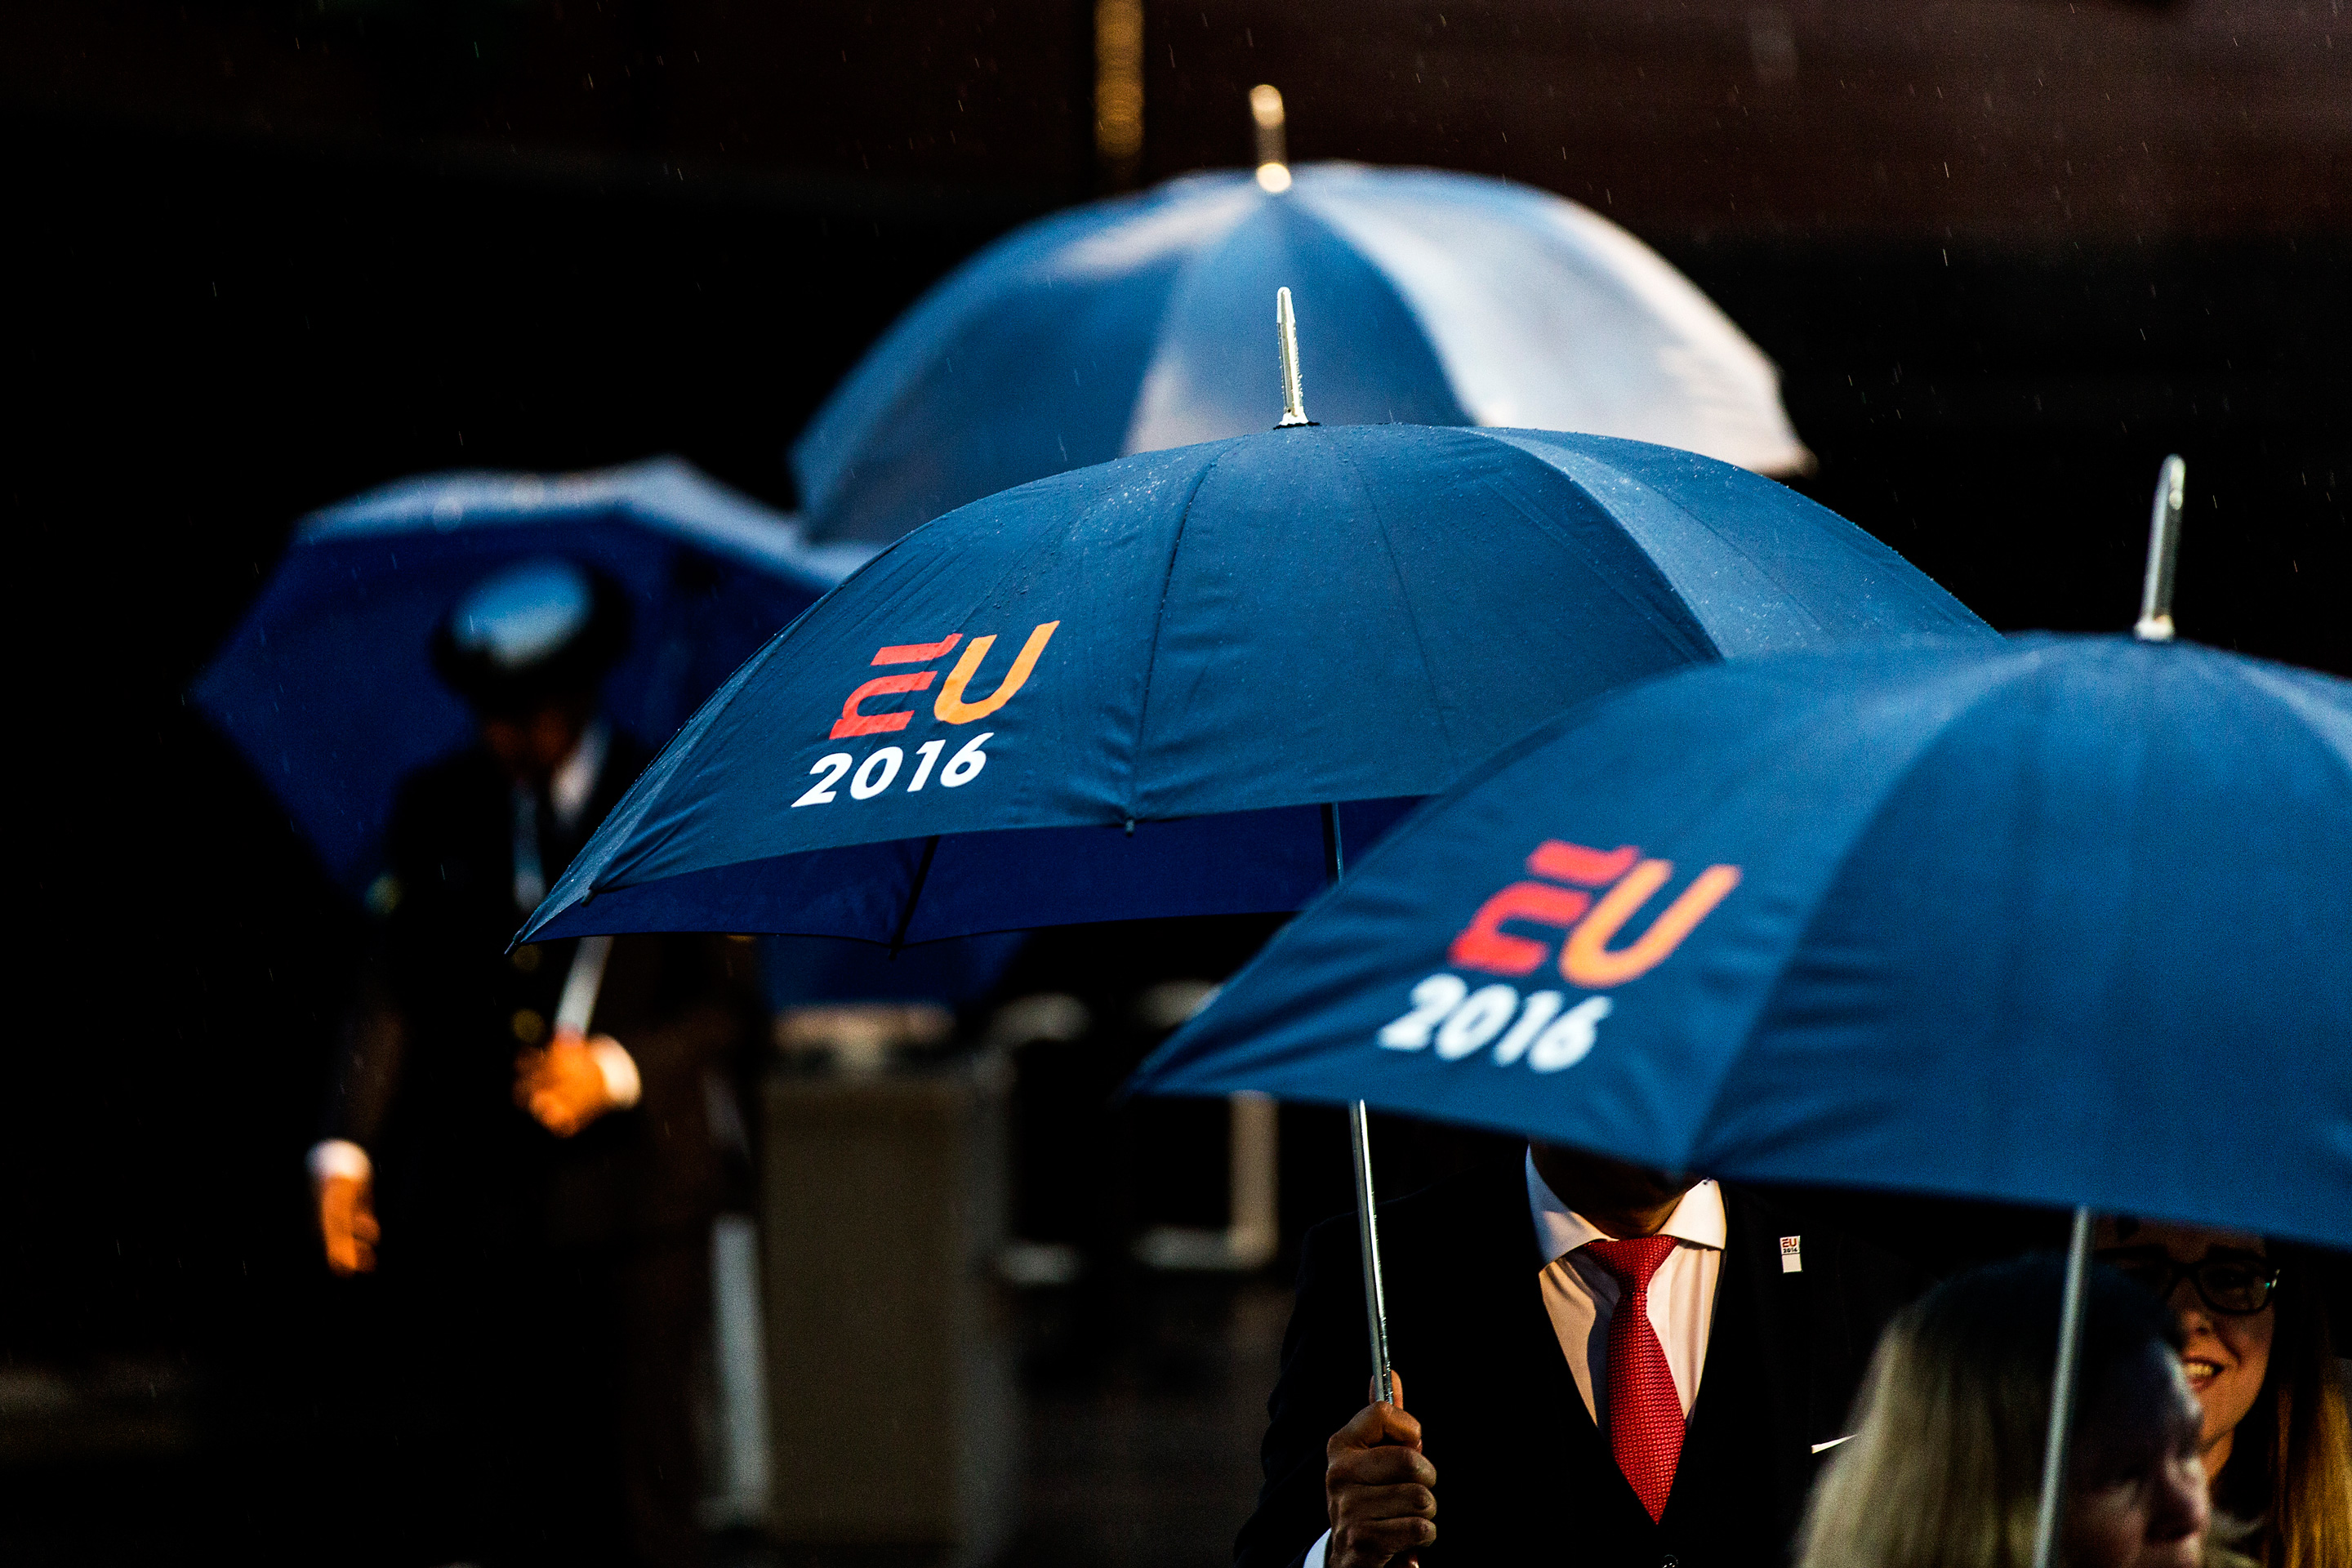 studio dumbar design visual brand identity for EUNL the European logo and event style for the Dutch Presidency of the European Union umbrella design 2016